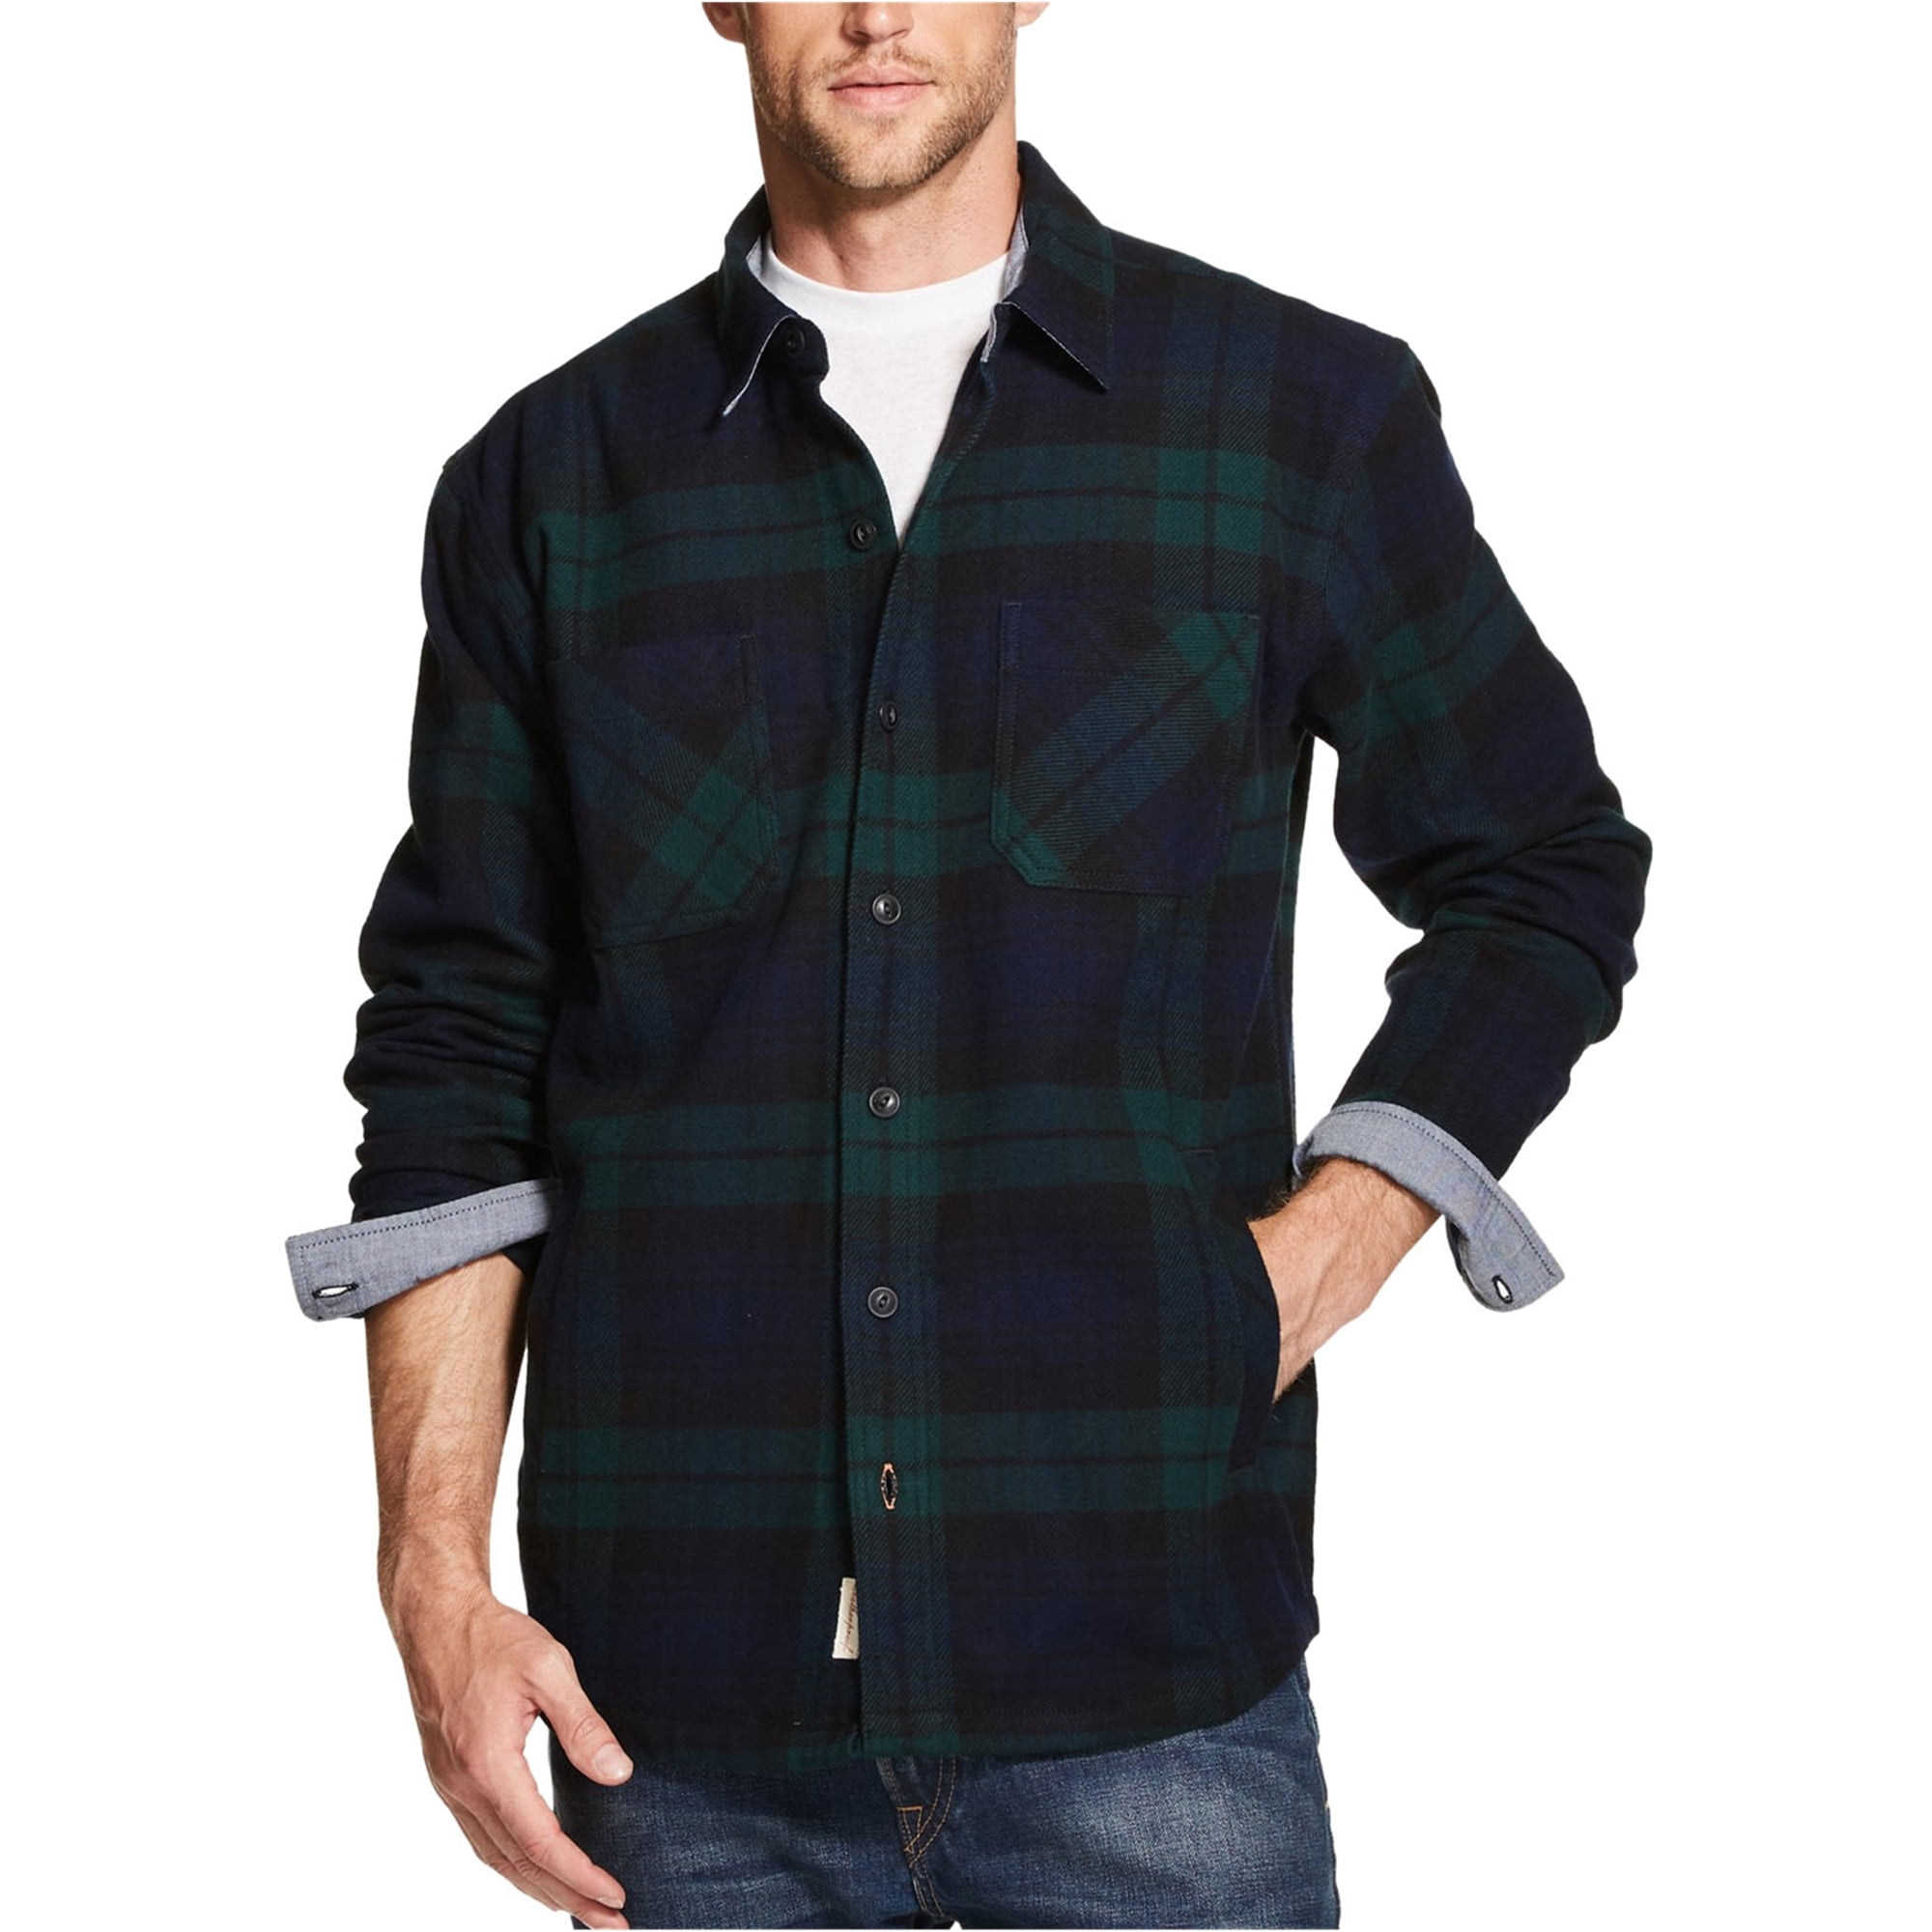 Weatherproof - Weatherproof Mens Flannel Button Up Shirt, Black, Medium ...